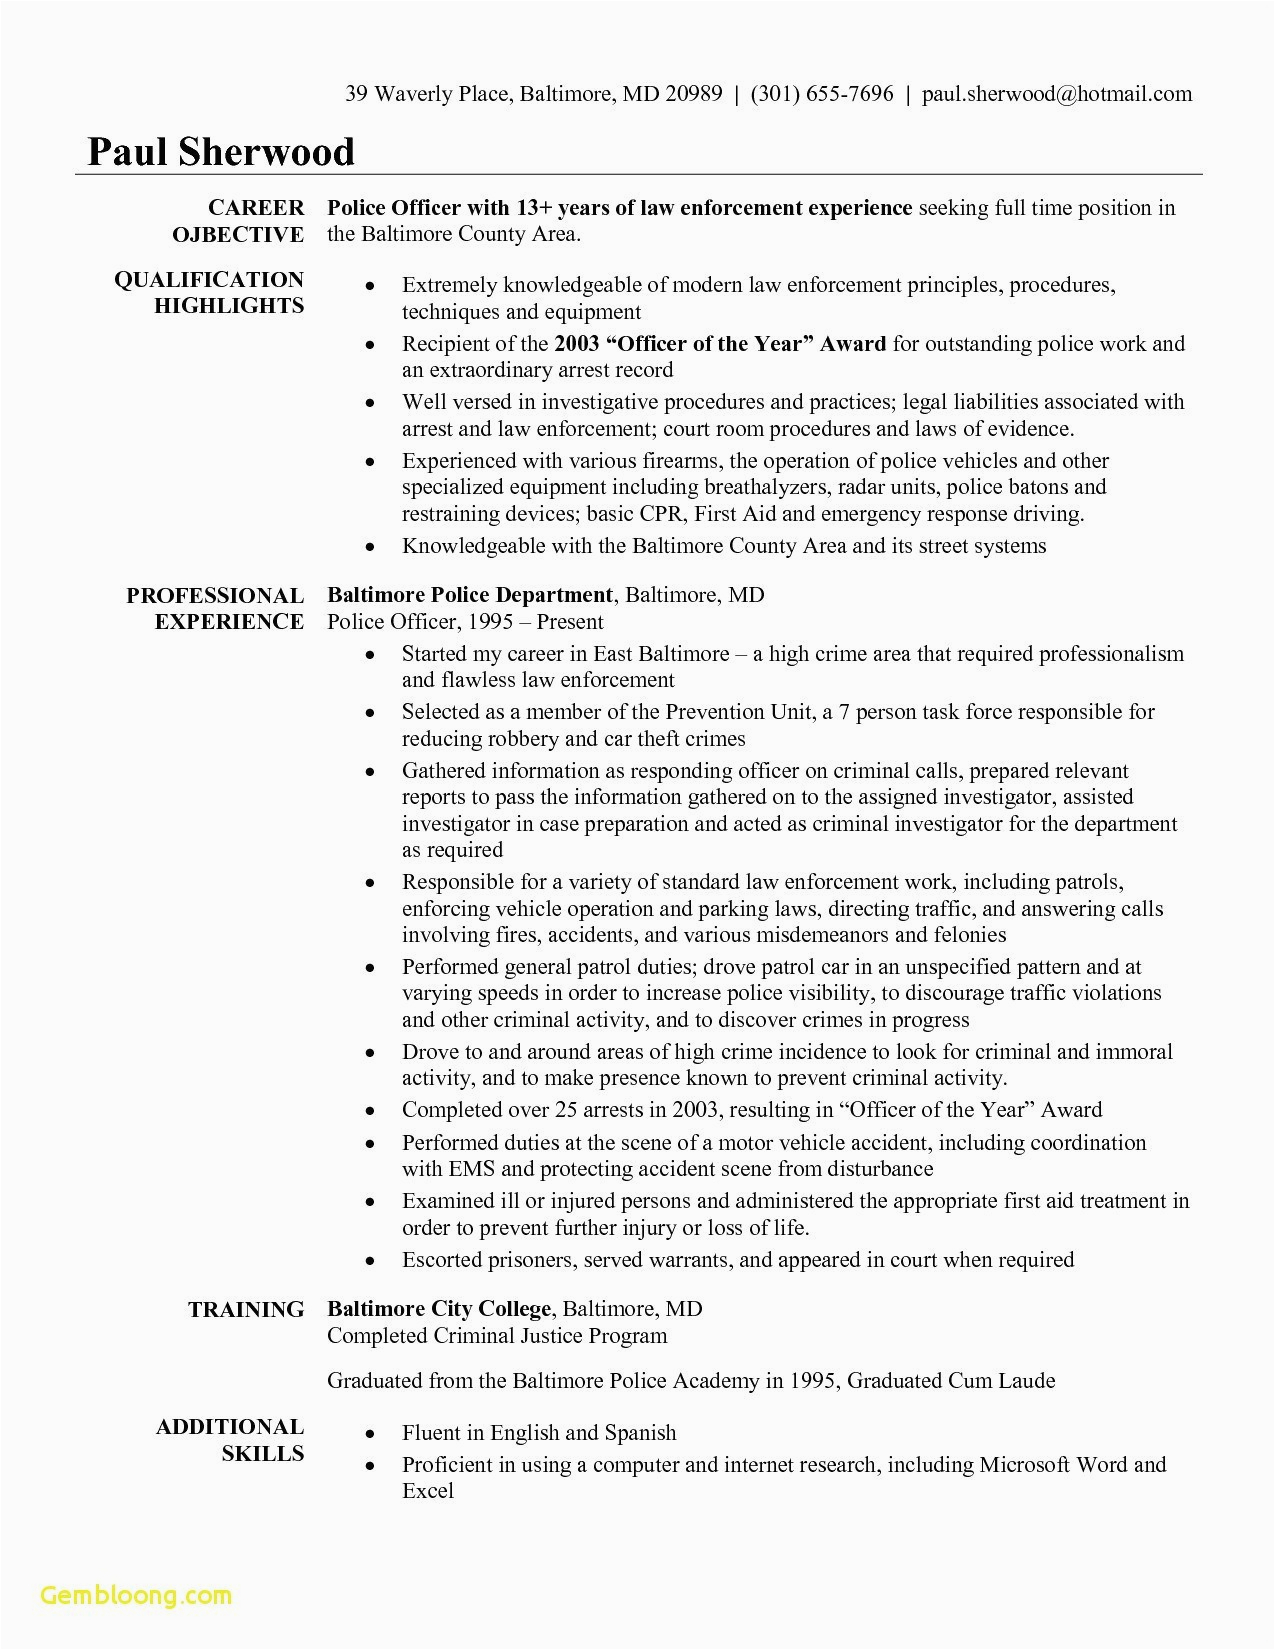 Sample Resume for Law Enforcement Position 11 Law Enforcement Resume Collection